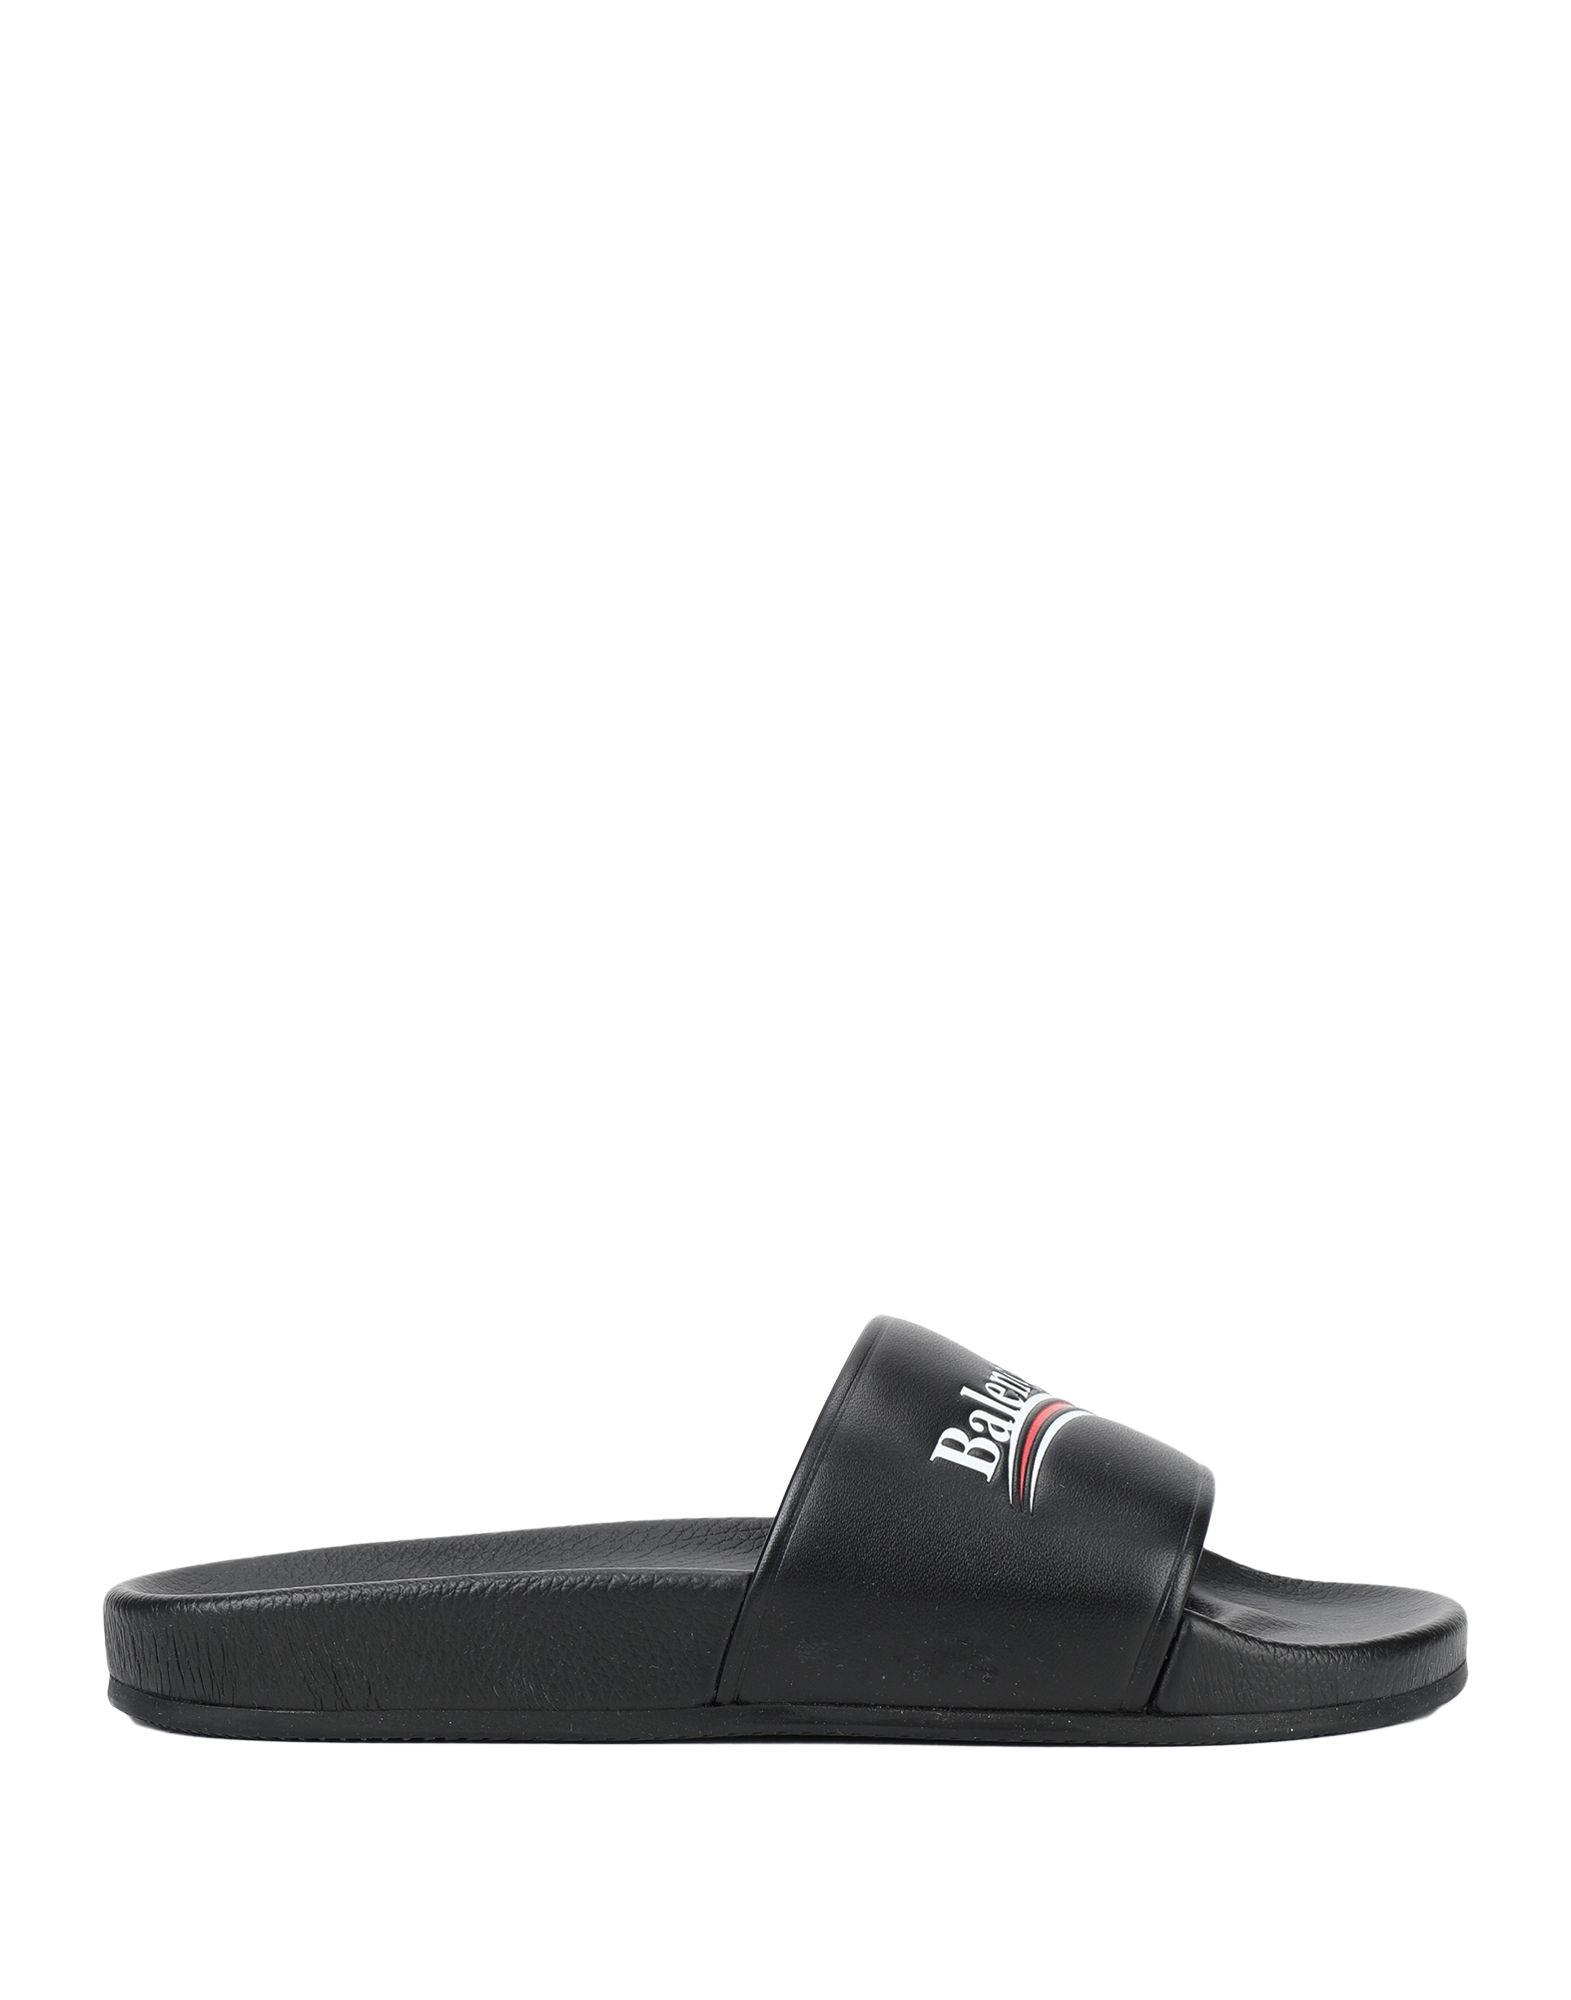 Balenciaga Sandals in Black for Men - Lyst